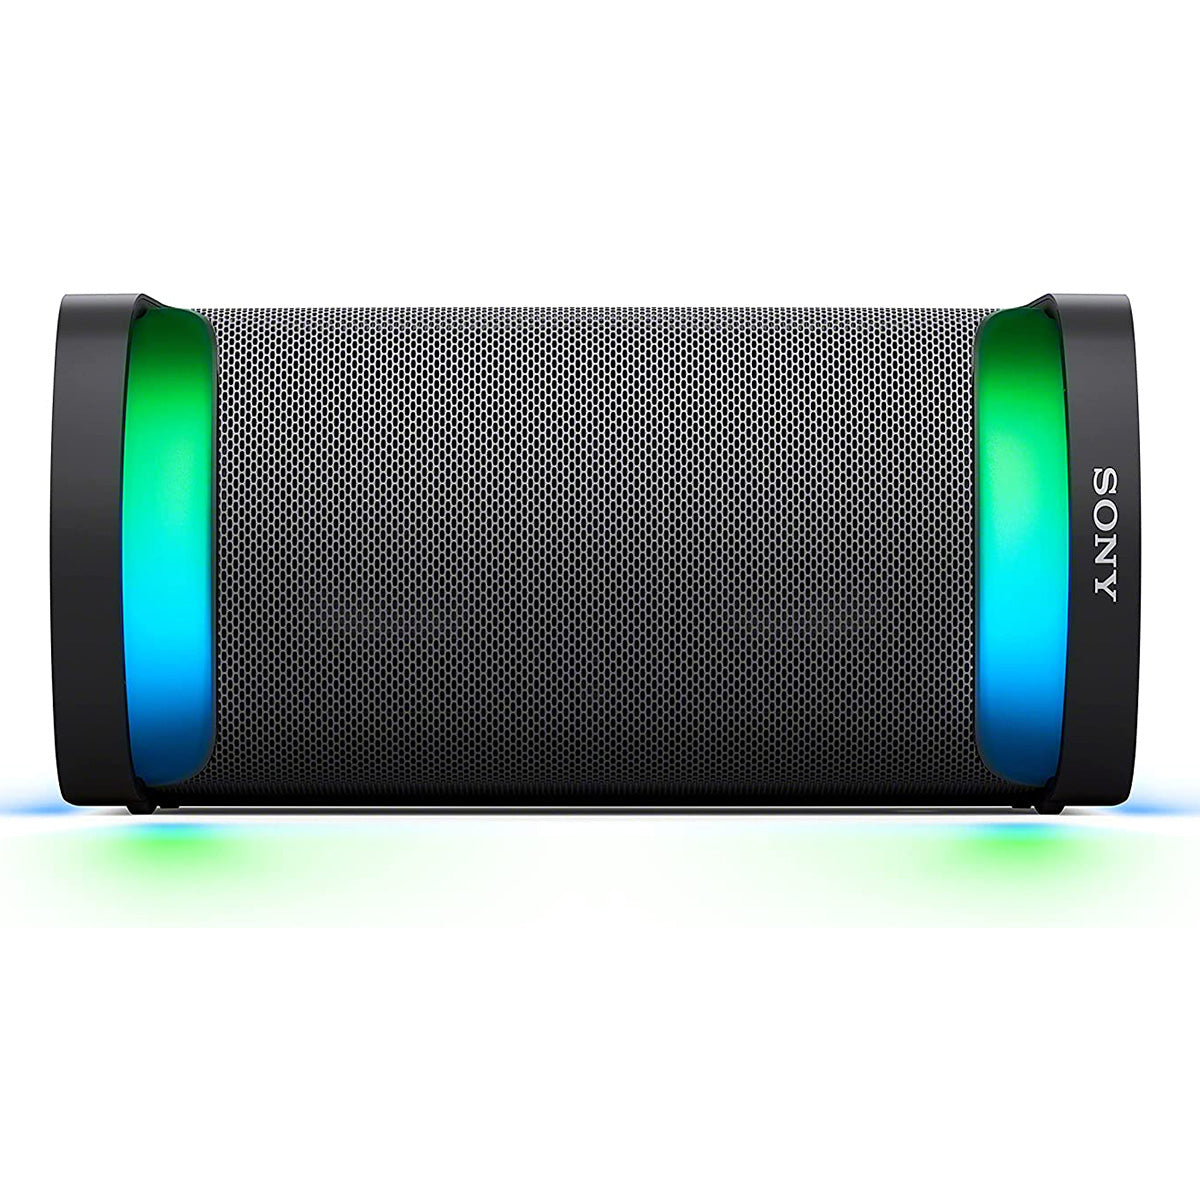 Sony XP500 Portable Bluetooth Wireless Speaker